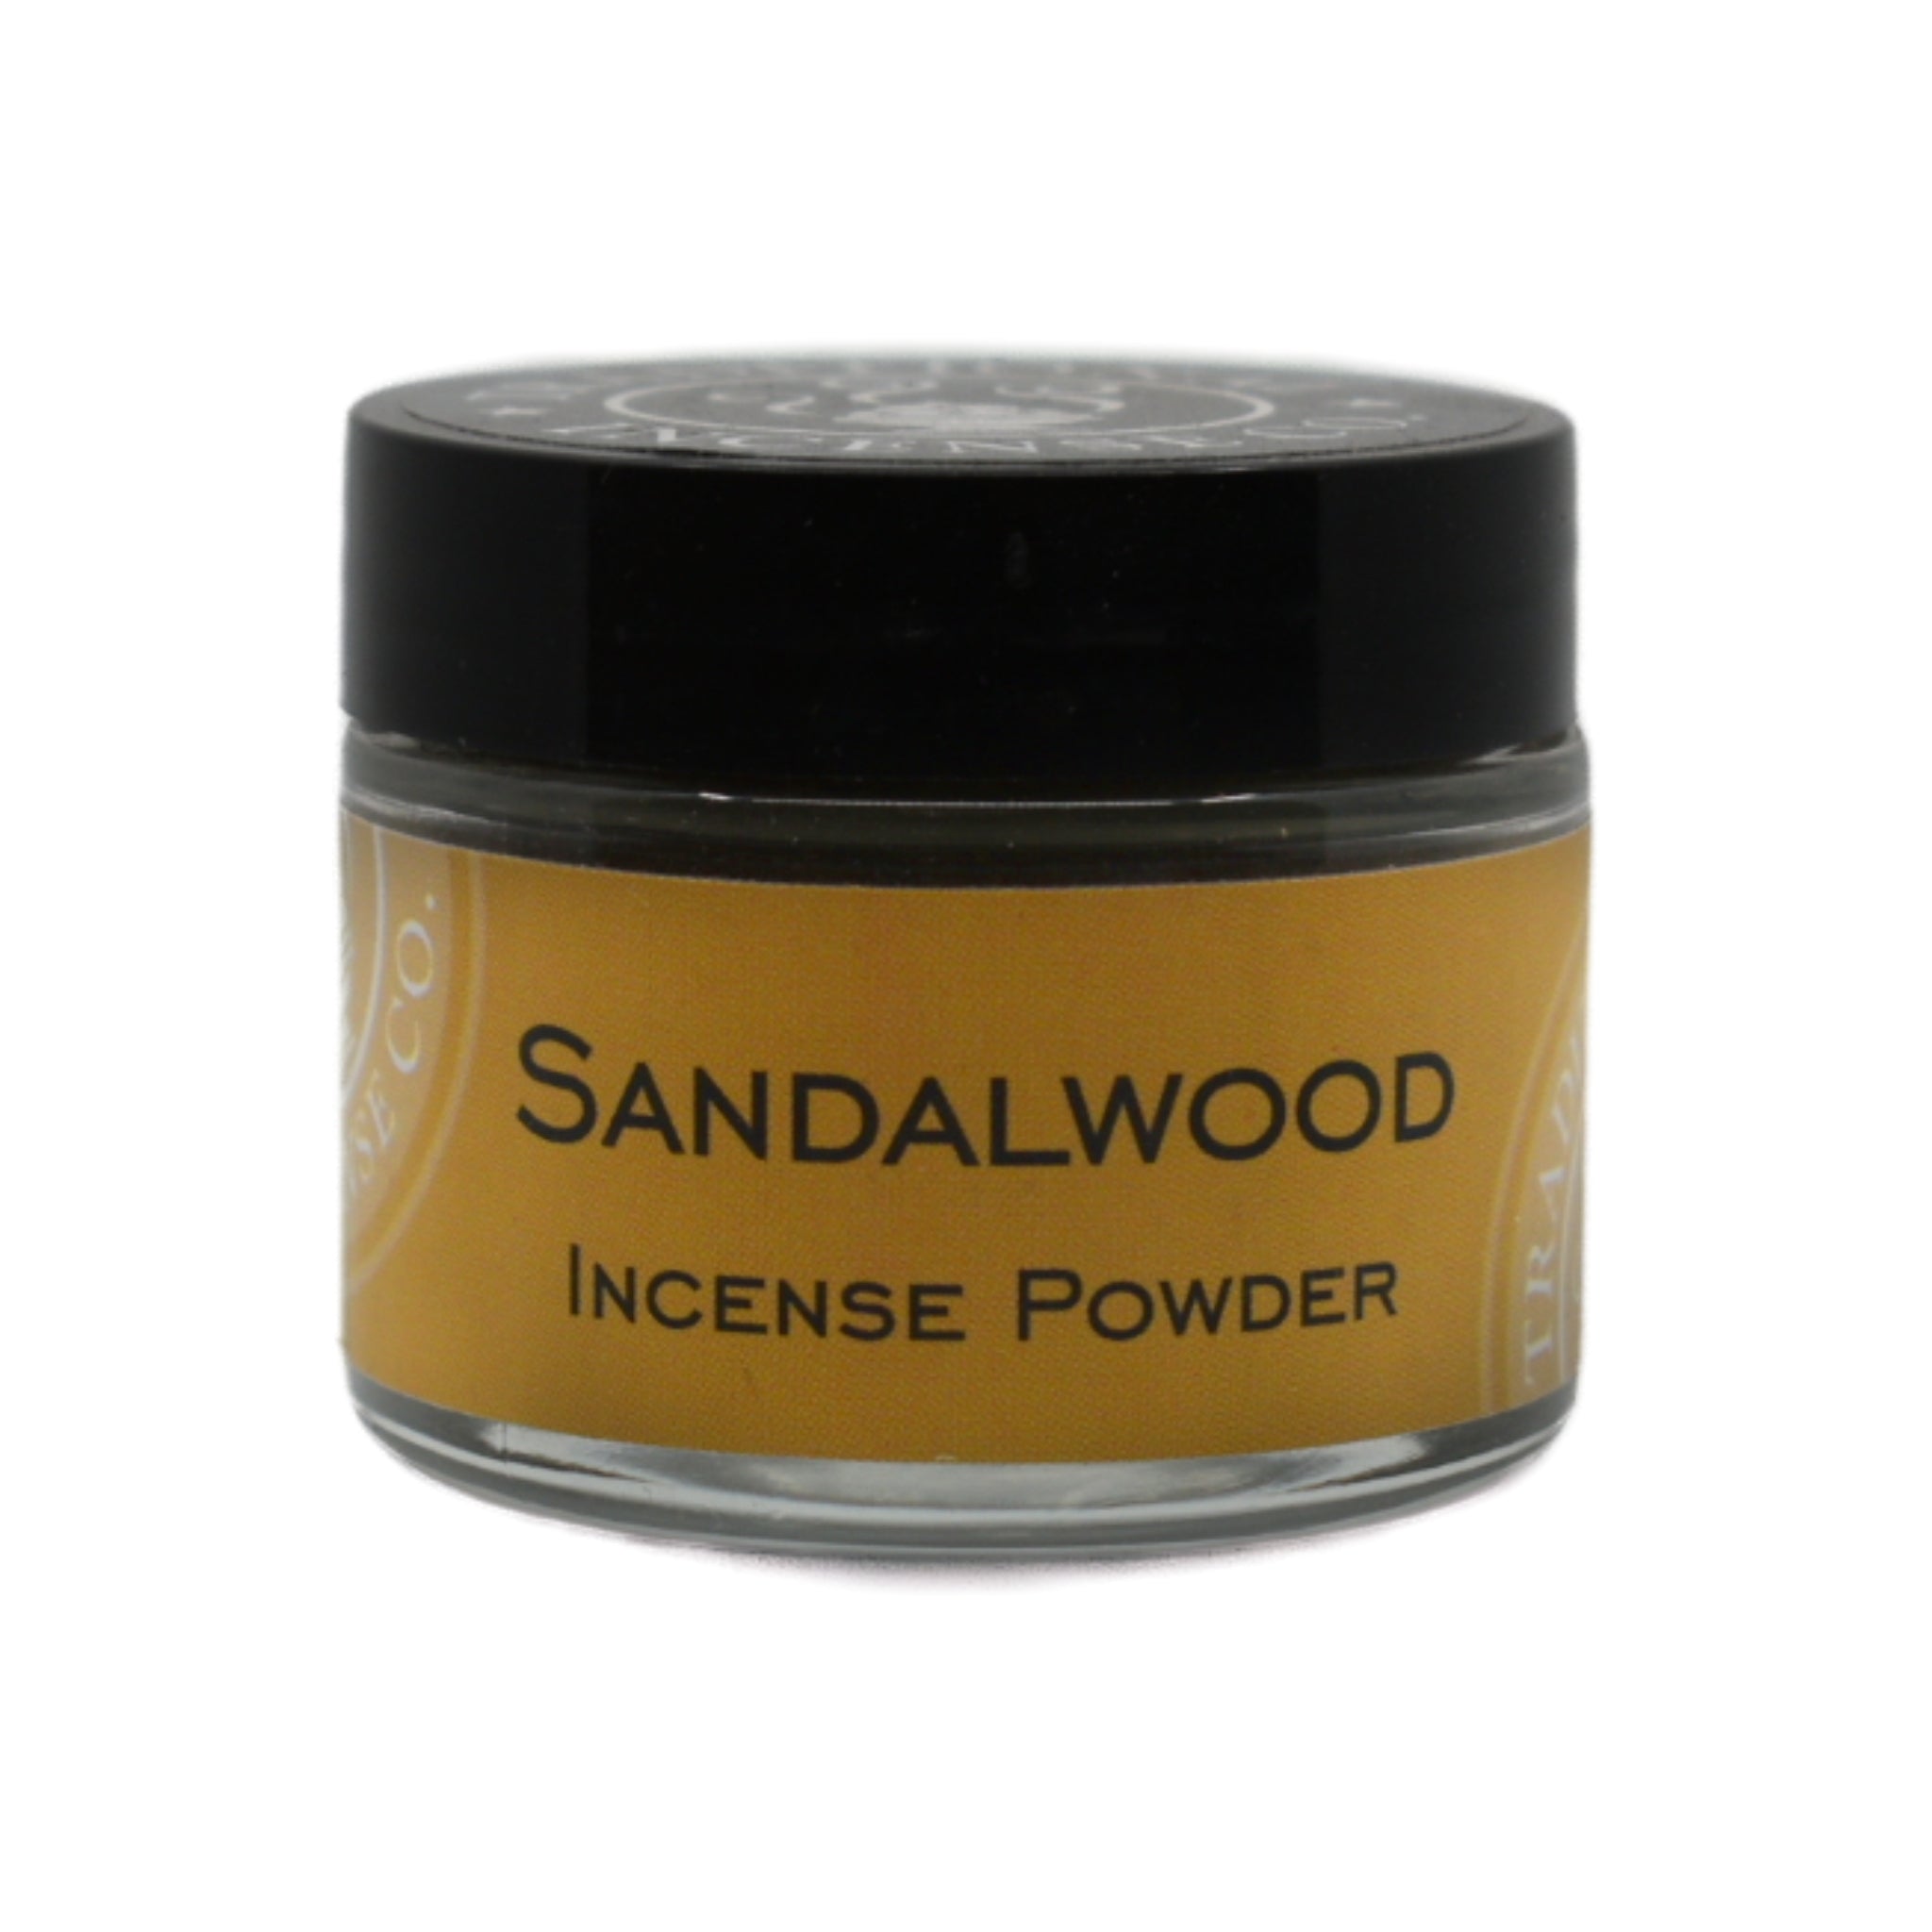 Sandalwood Incense Powder